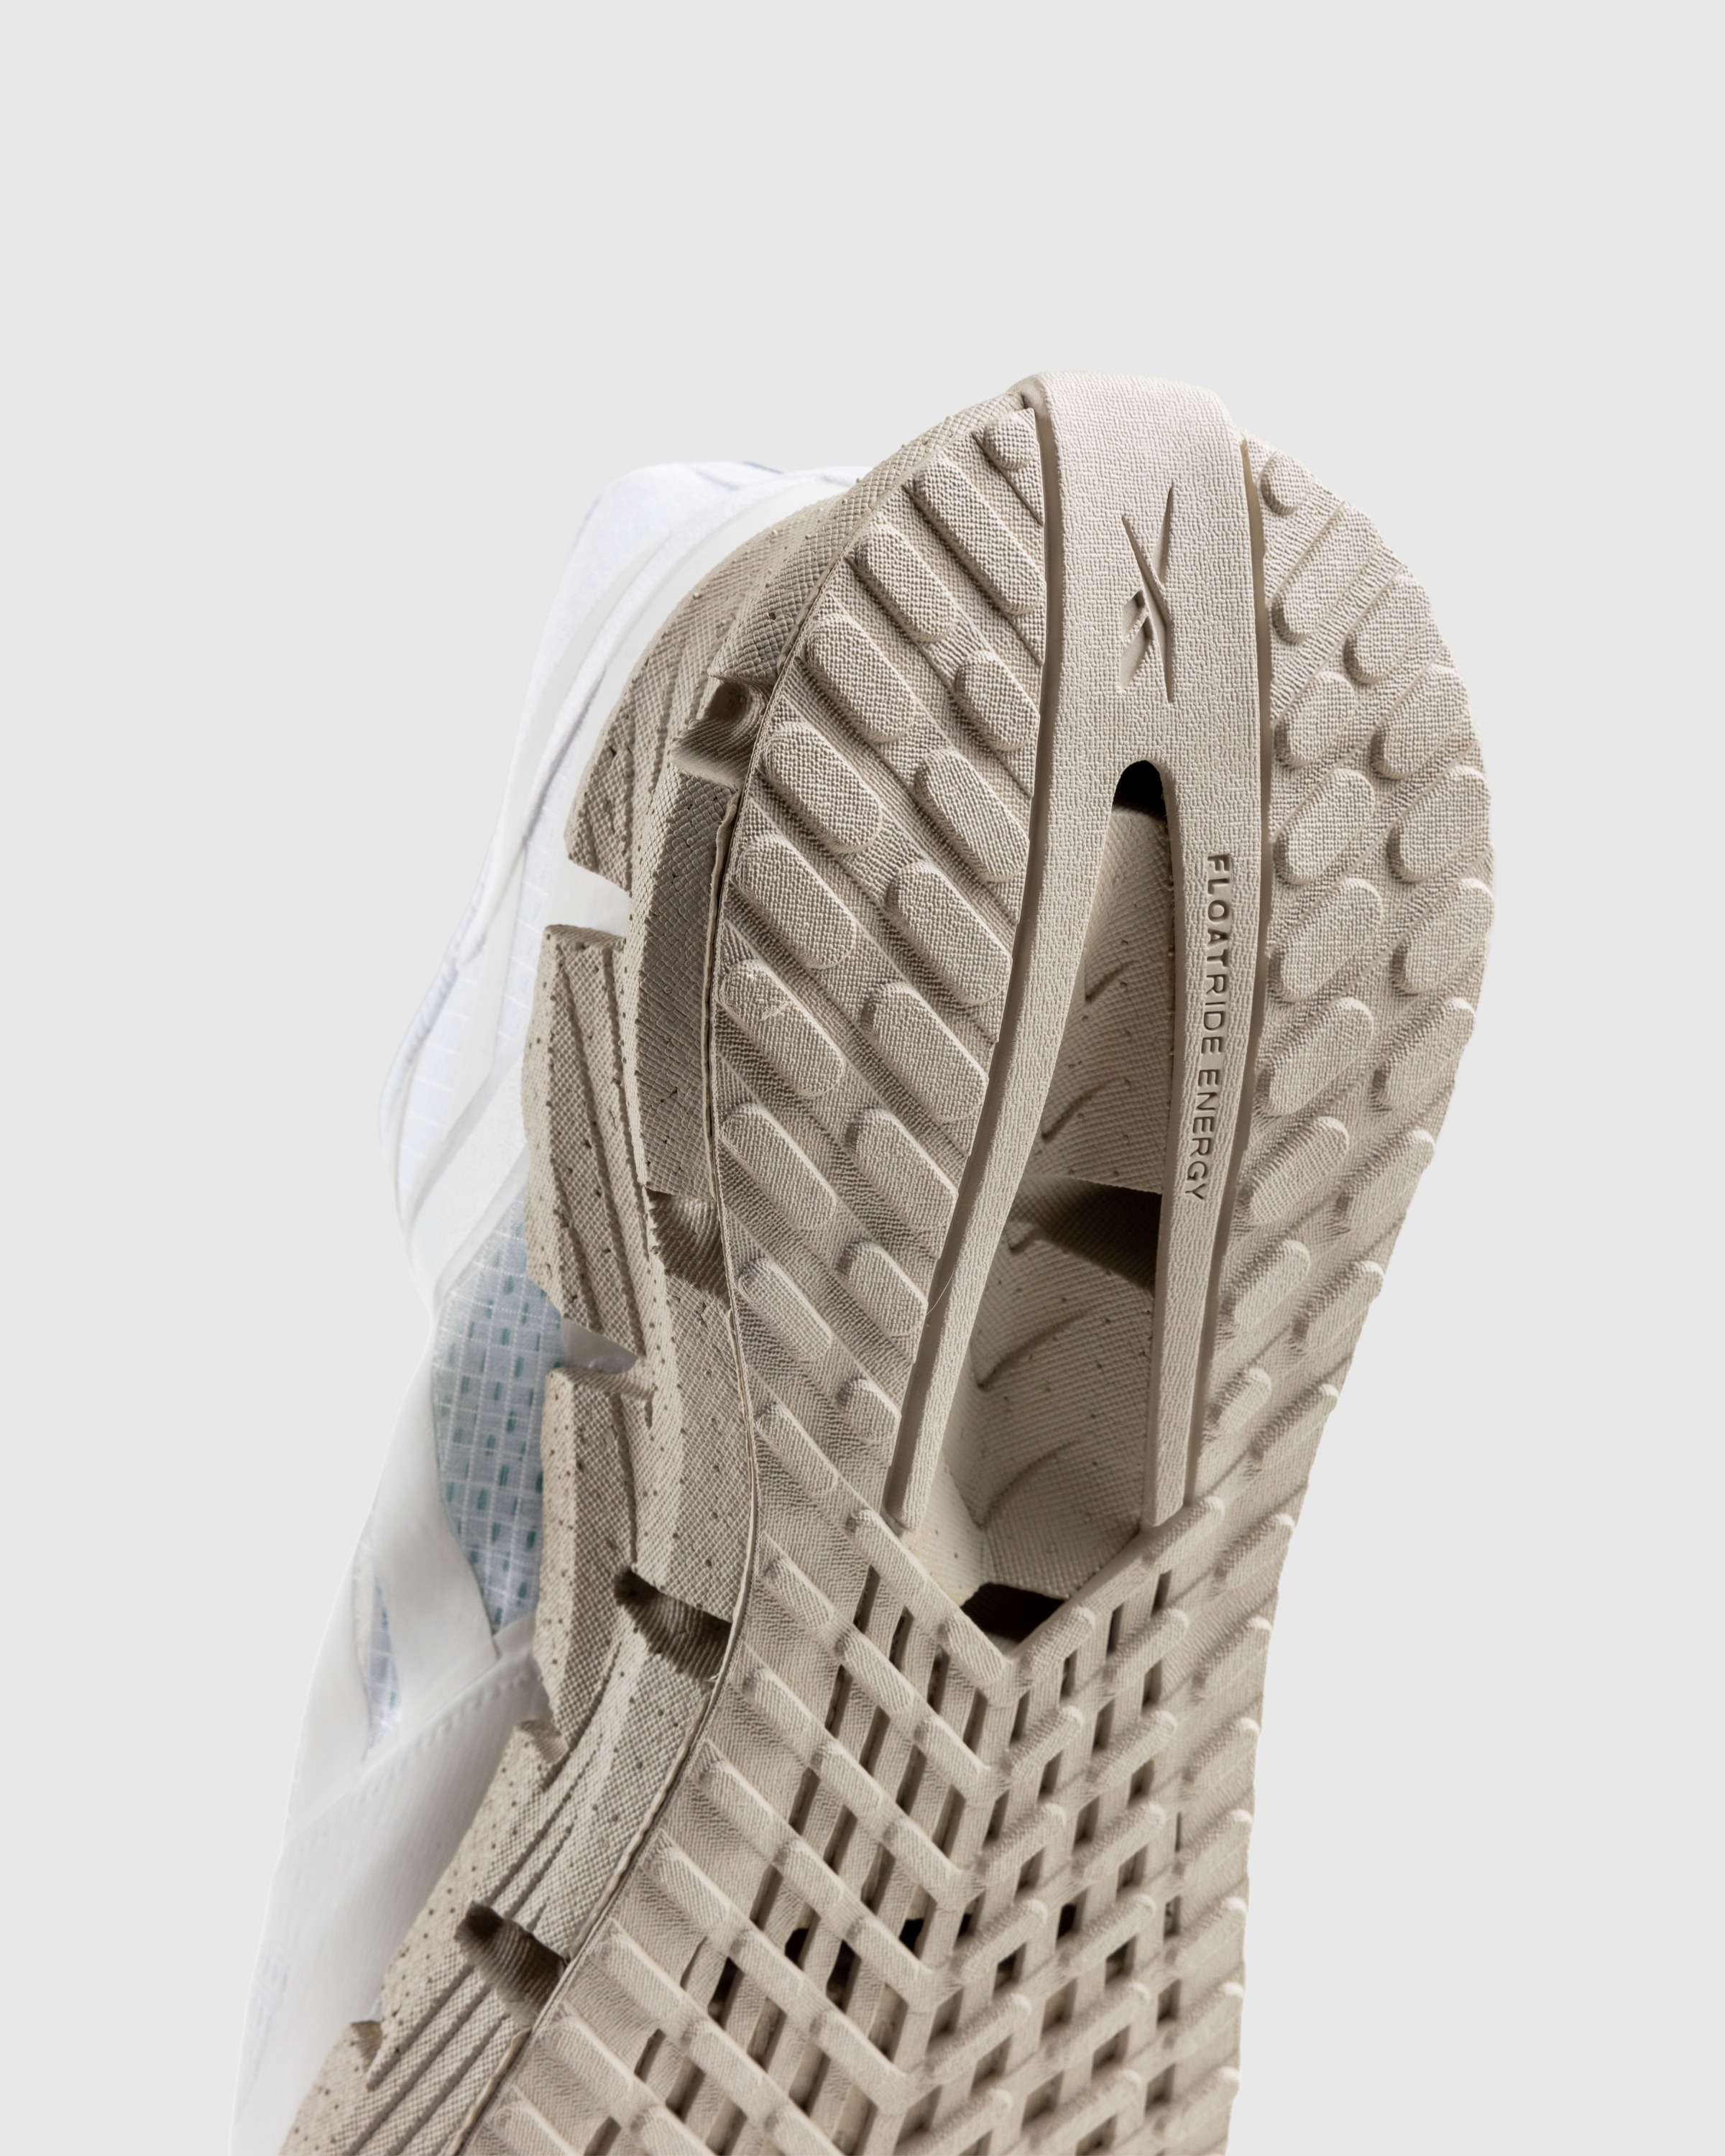 Reebok – FloatZig White - Low Top Sneakers - White - Image 6